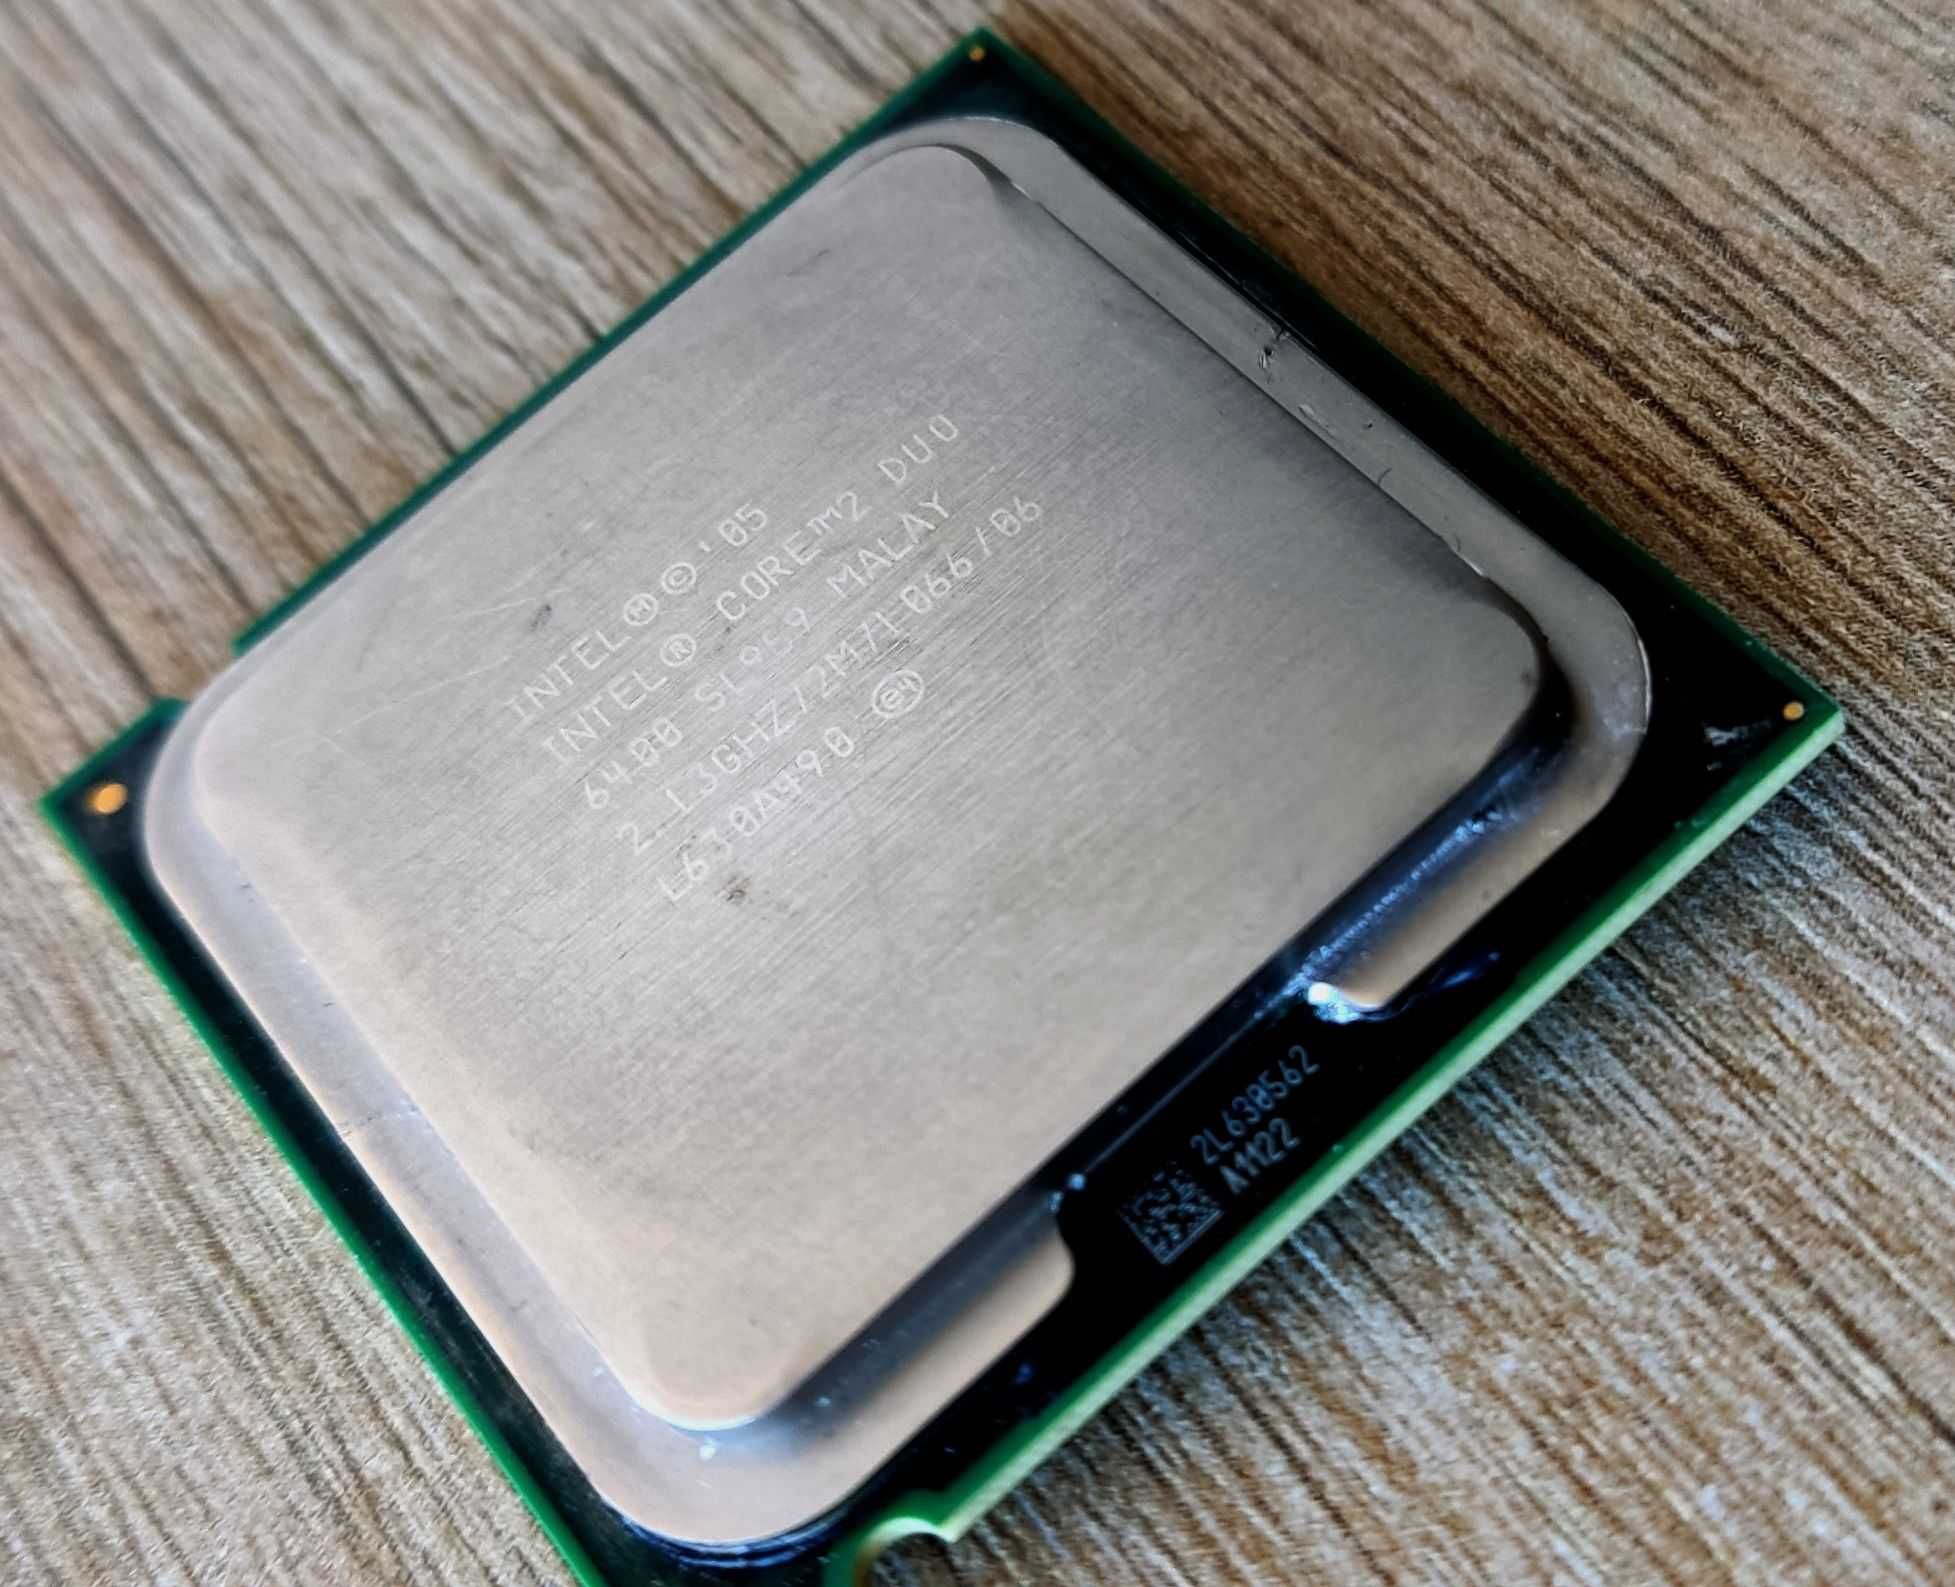 Procesor Intel Core 2 Duo E6400 LGA 775 - SL9S9 B2